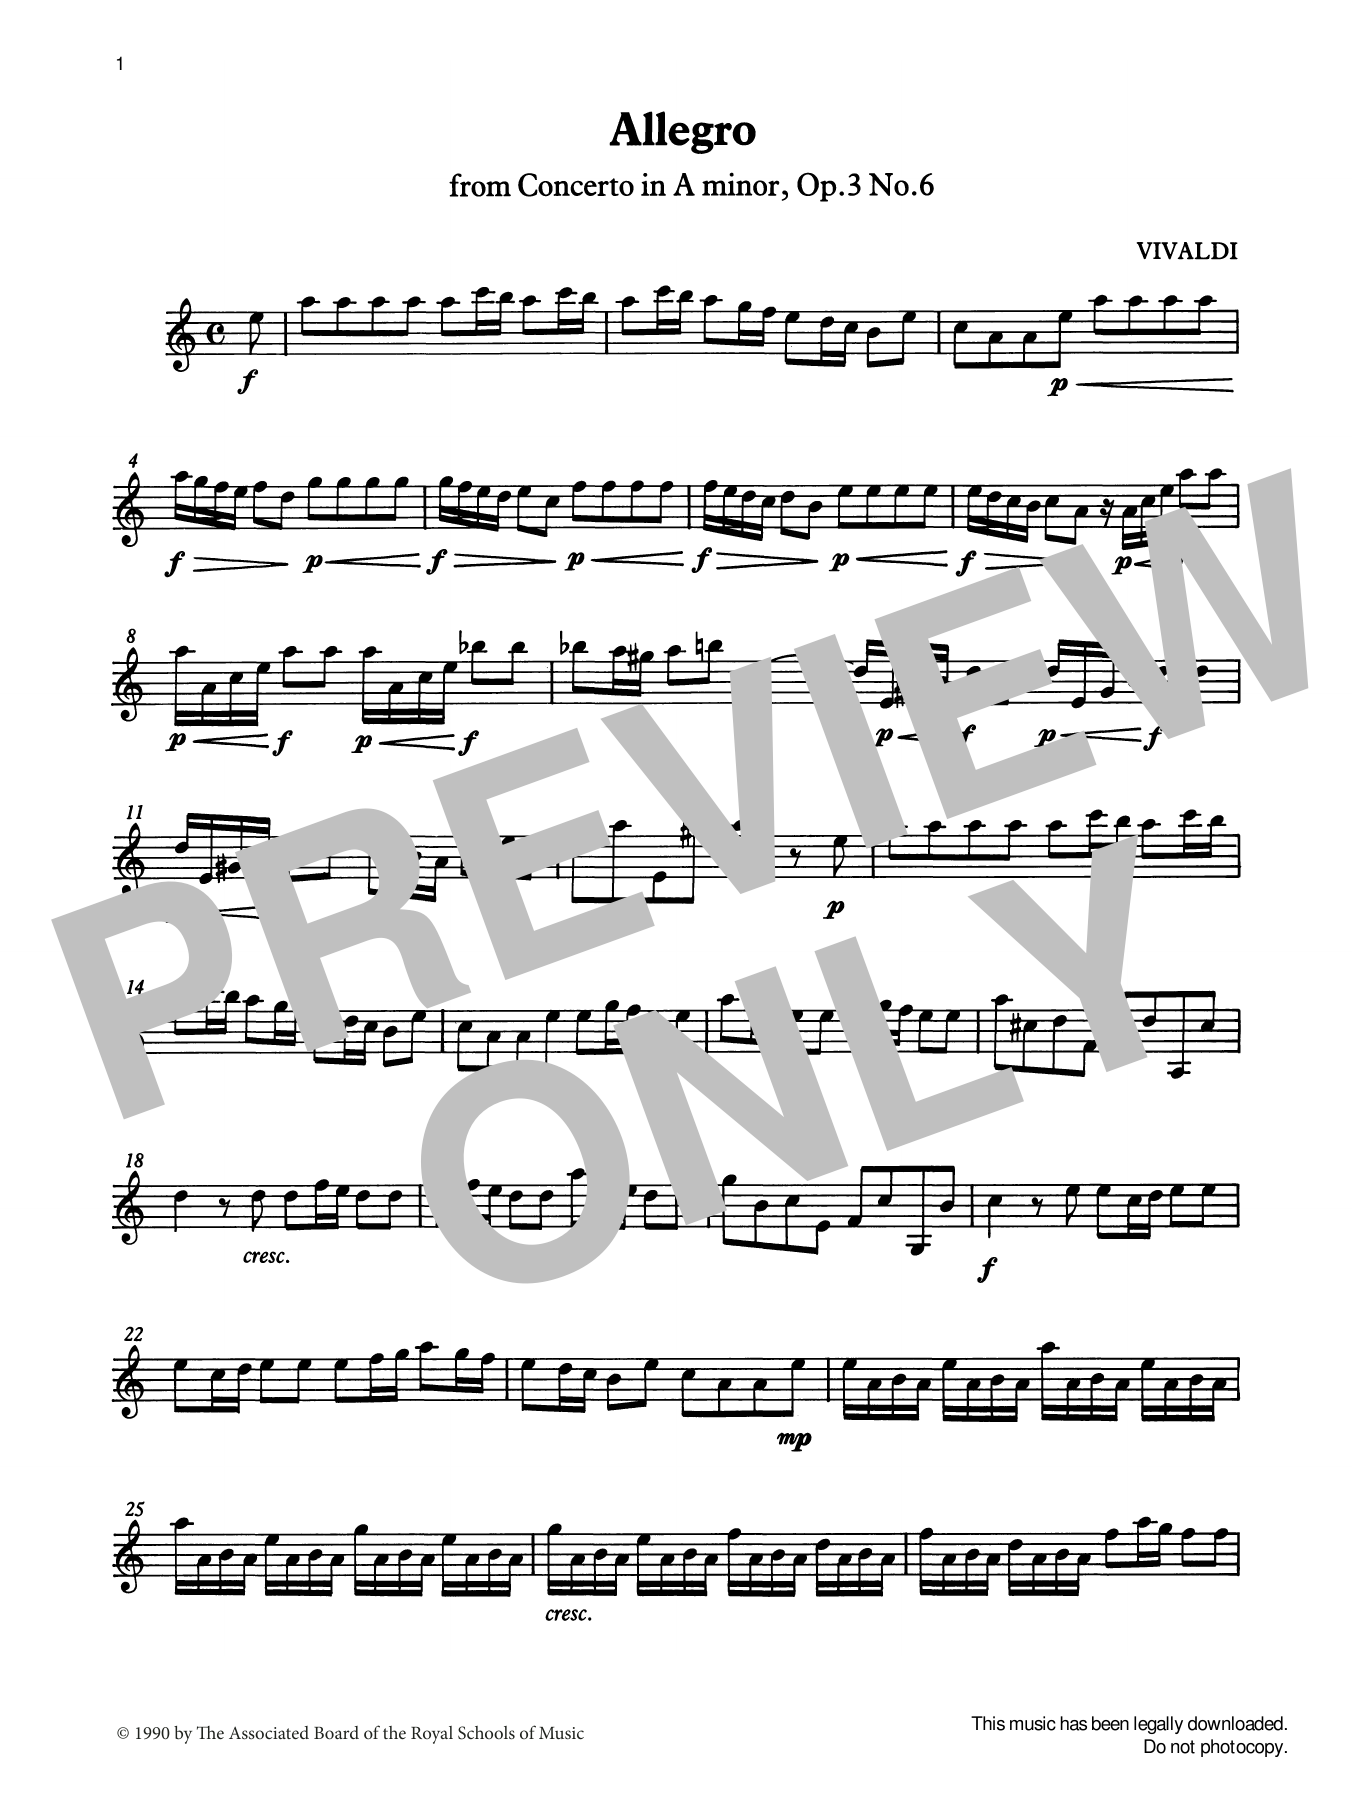 Antonio Vivaldi Allegro (Vivaldi) from Graded Music for Tuned Percussion, Book IV Sheet Music Notes & Chords for Percussion Solo - Download or Print PDF